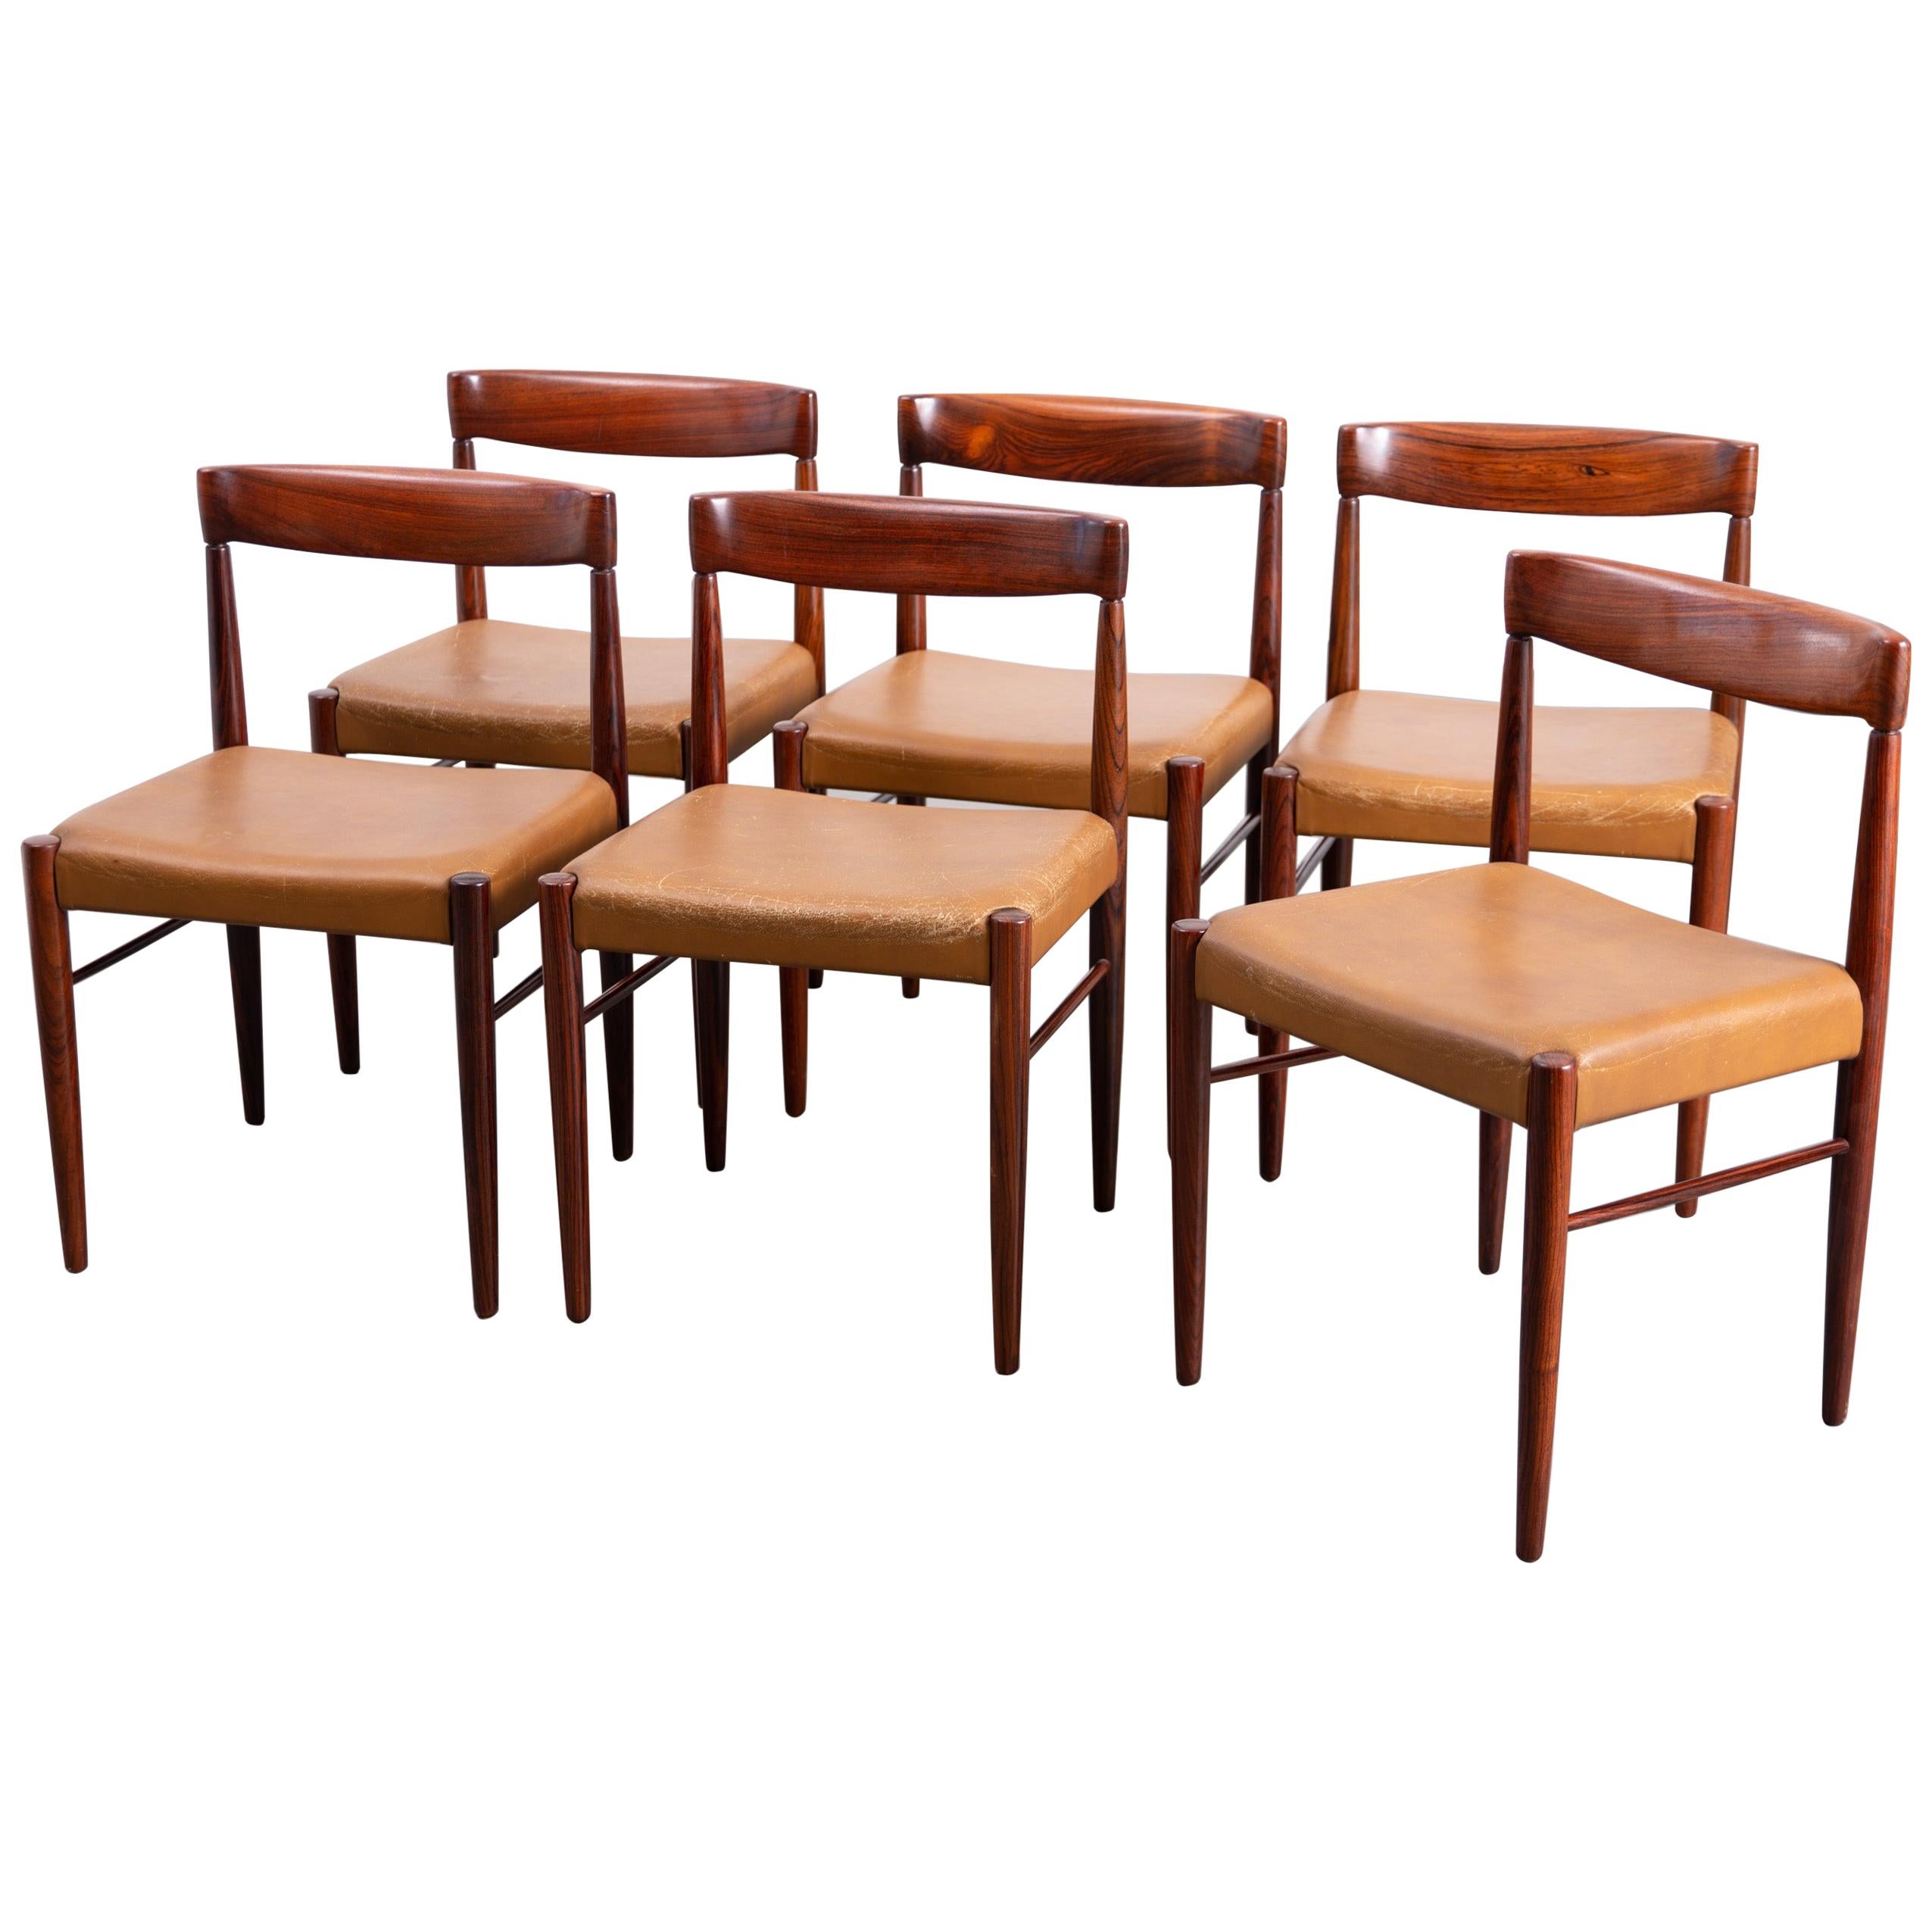 Set of 6 Danish Mid-Century Modern Dining Chairs